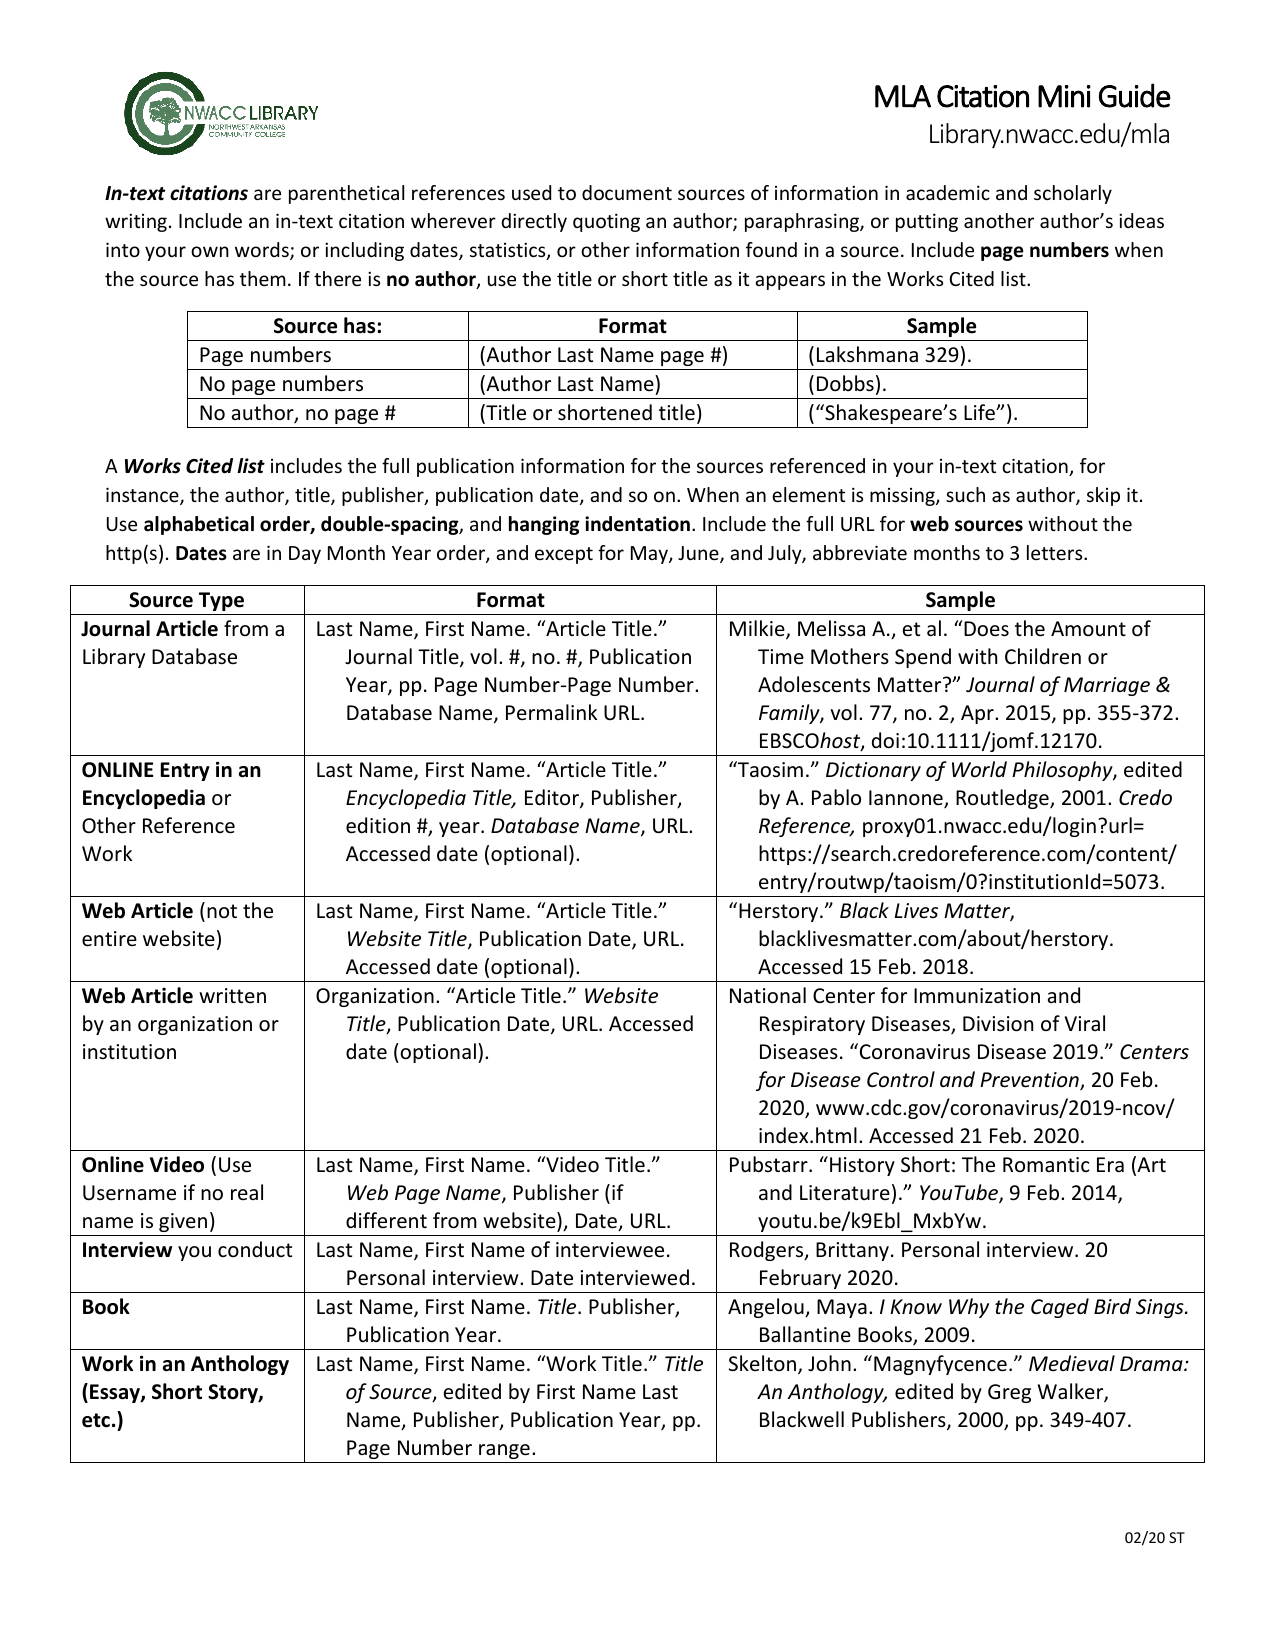 Handout Mla Citation Mini Guide V2